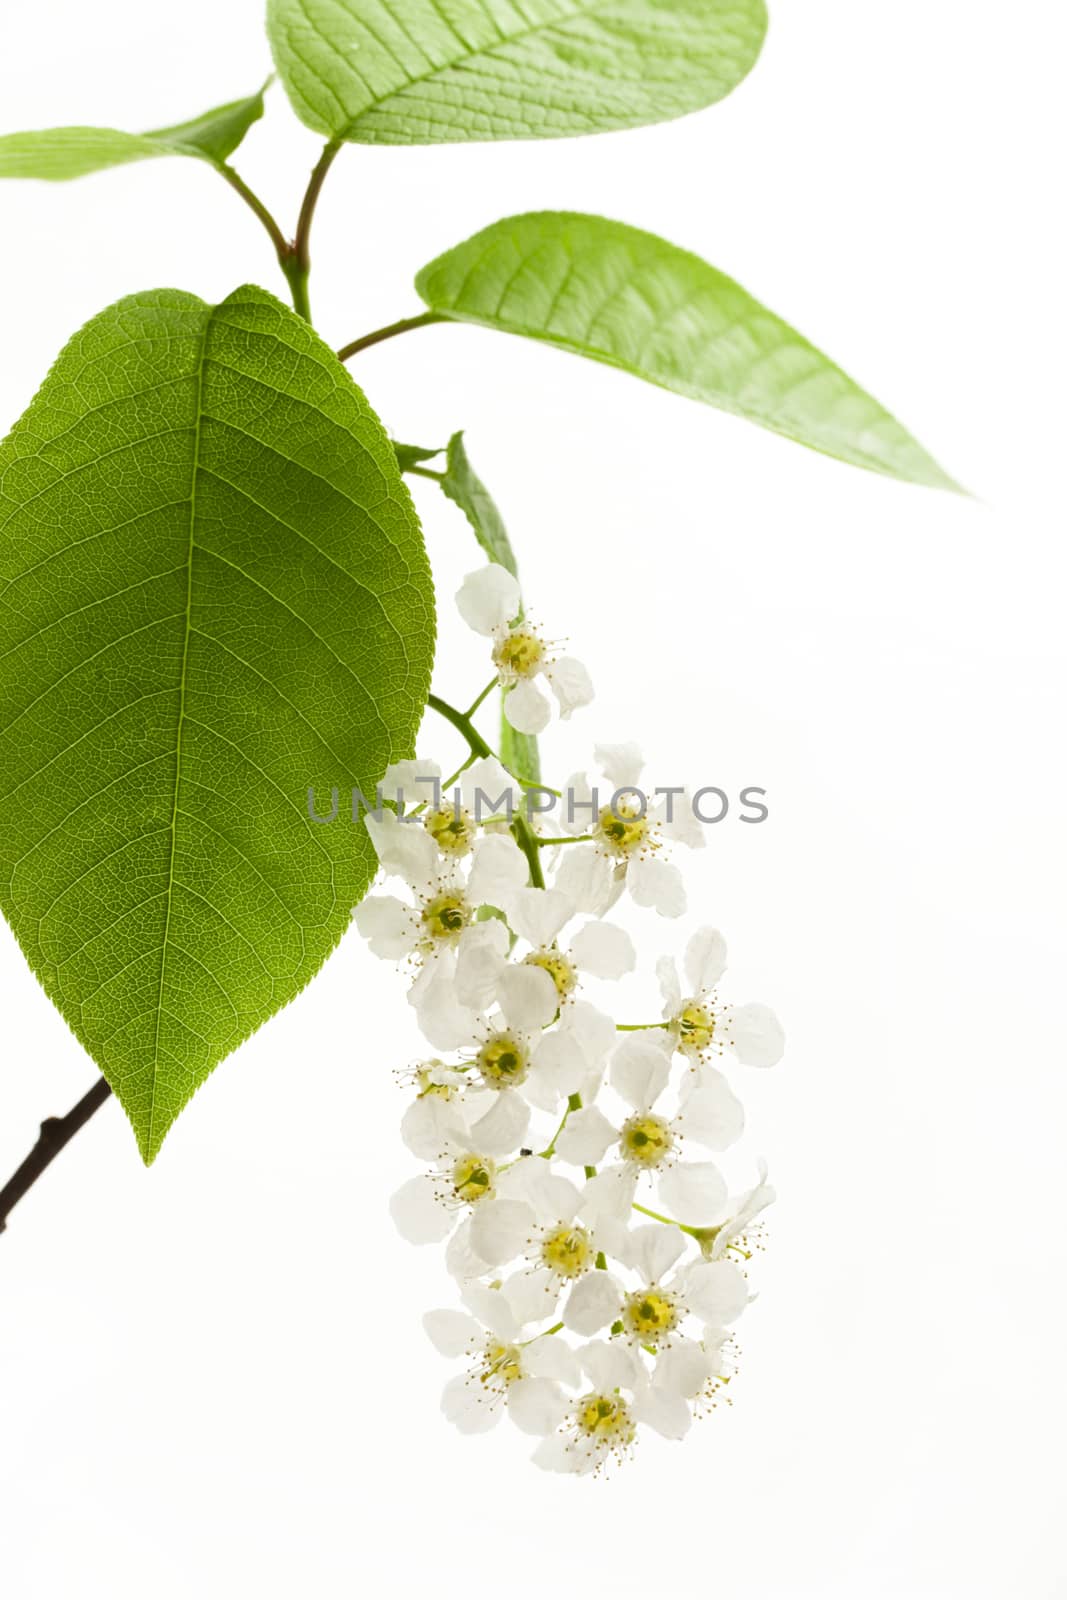 Bird cherry tree flowers on white